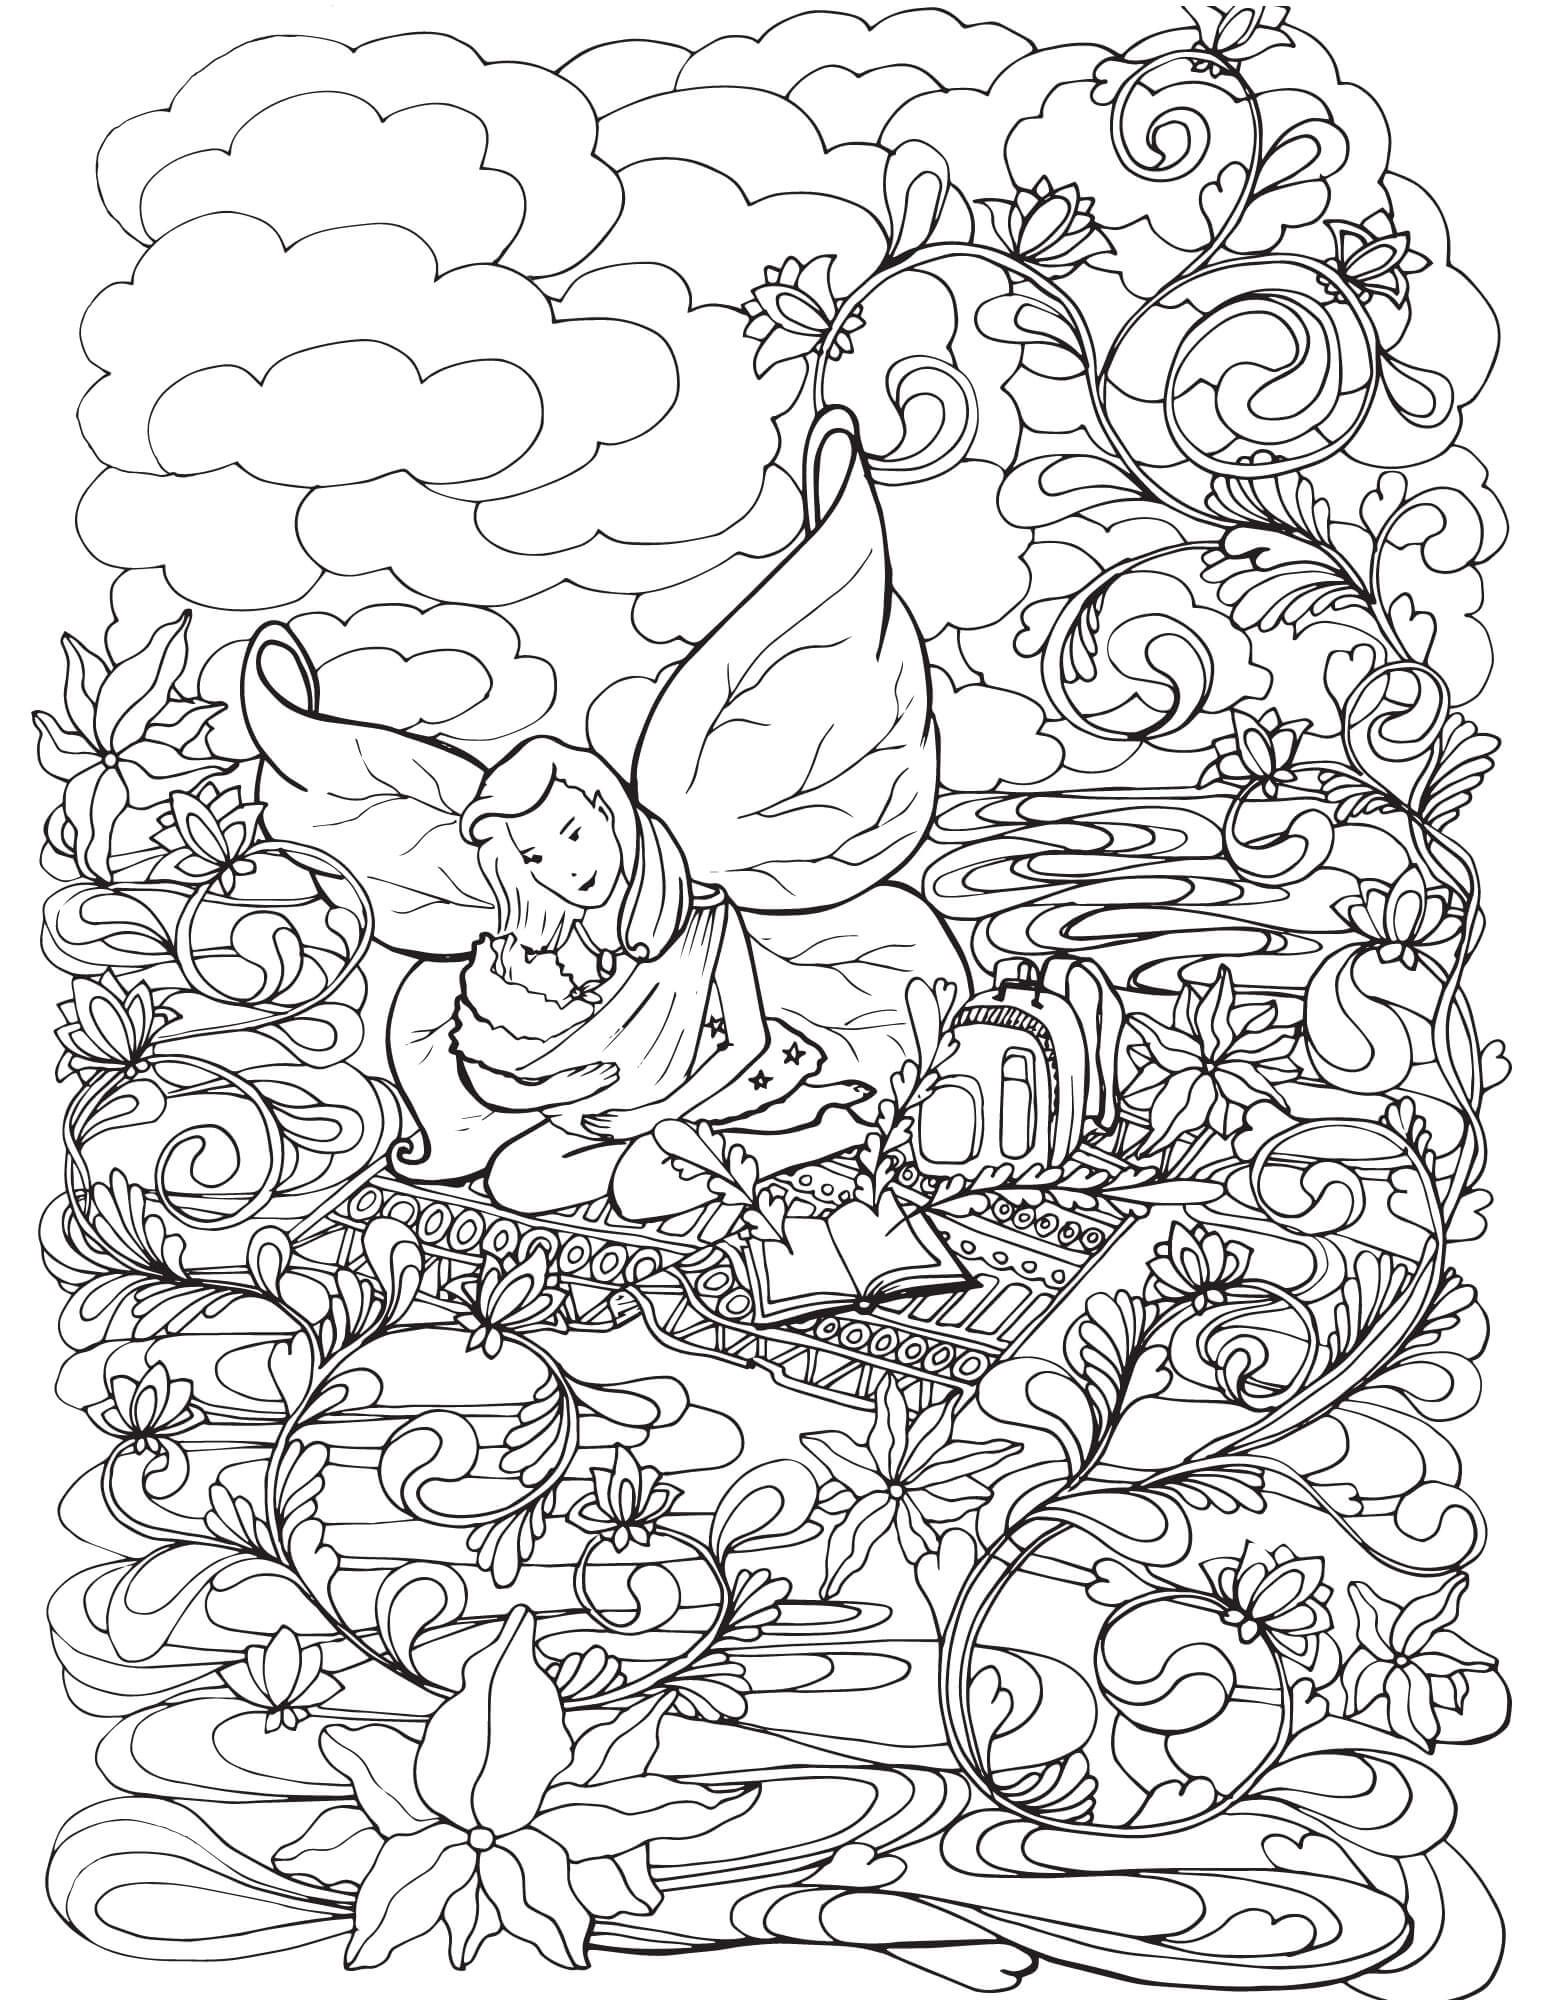 Mandala Fairy Coloring Page - Sheet 8 Mandalas